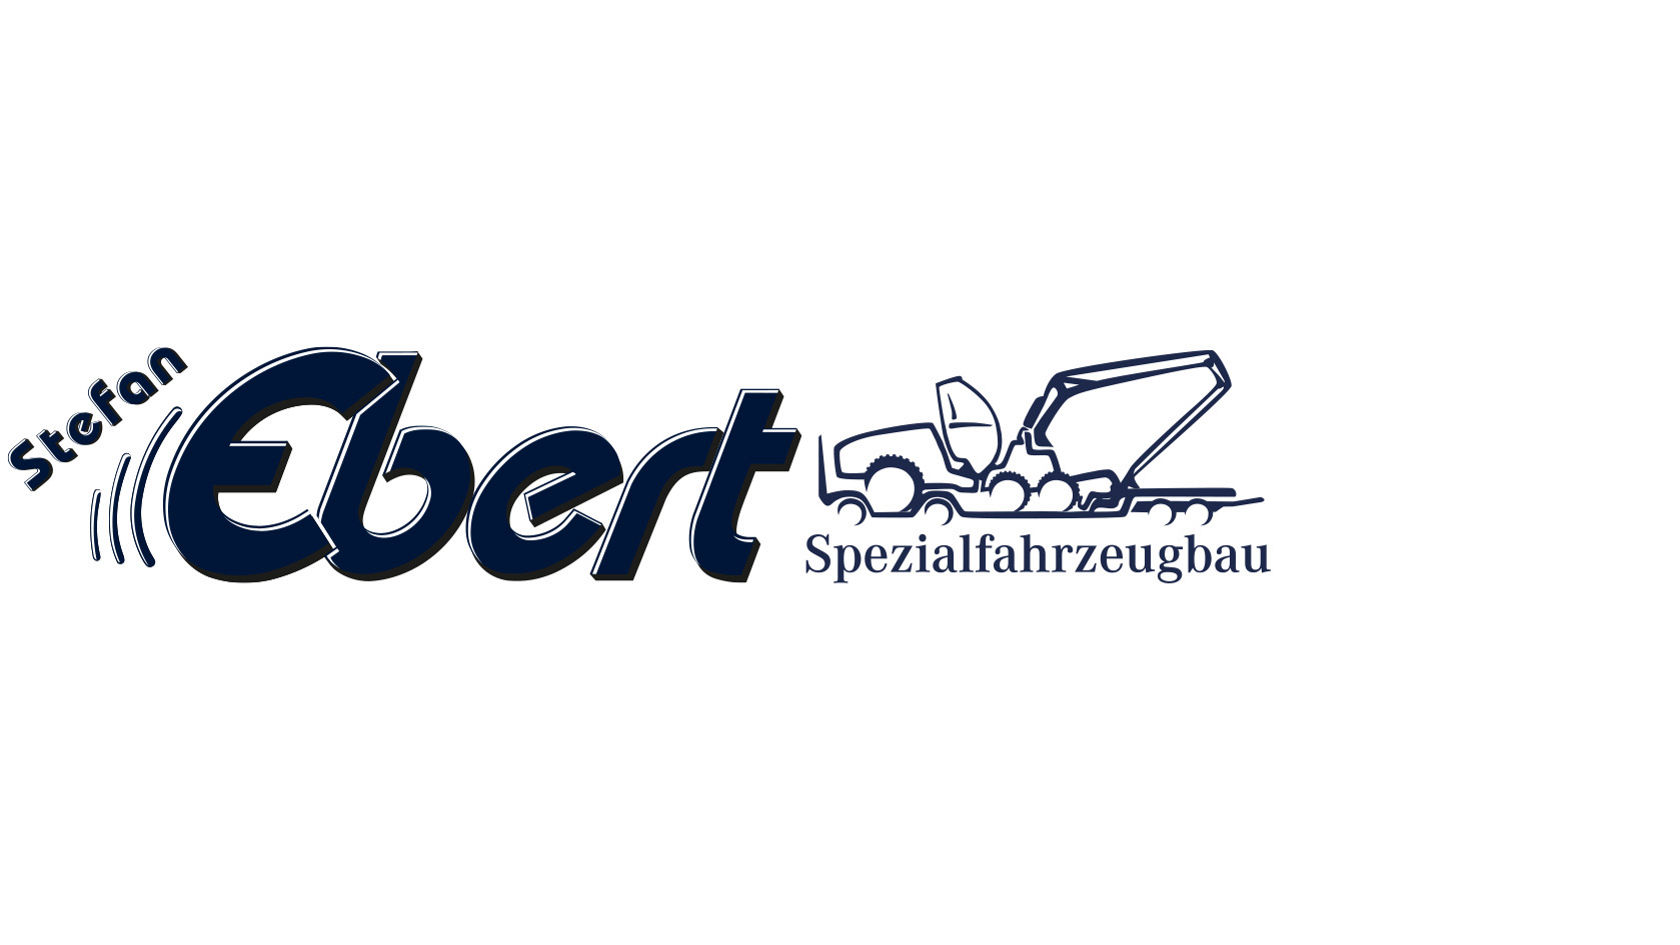 Stefan Ebert GmbH.